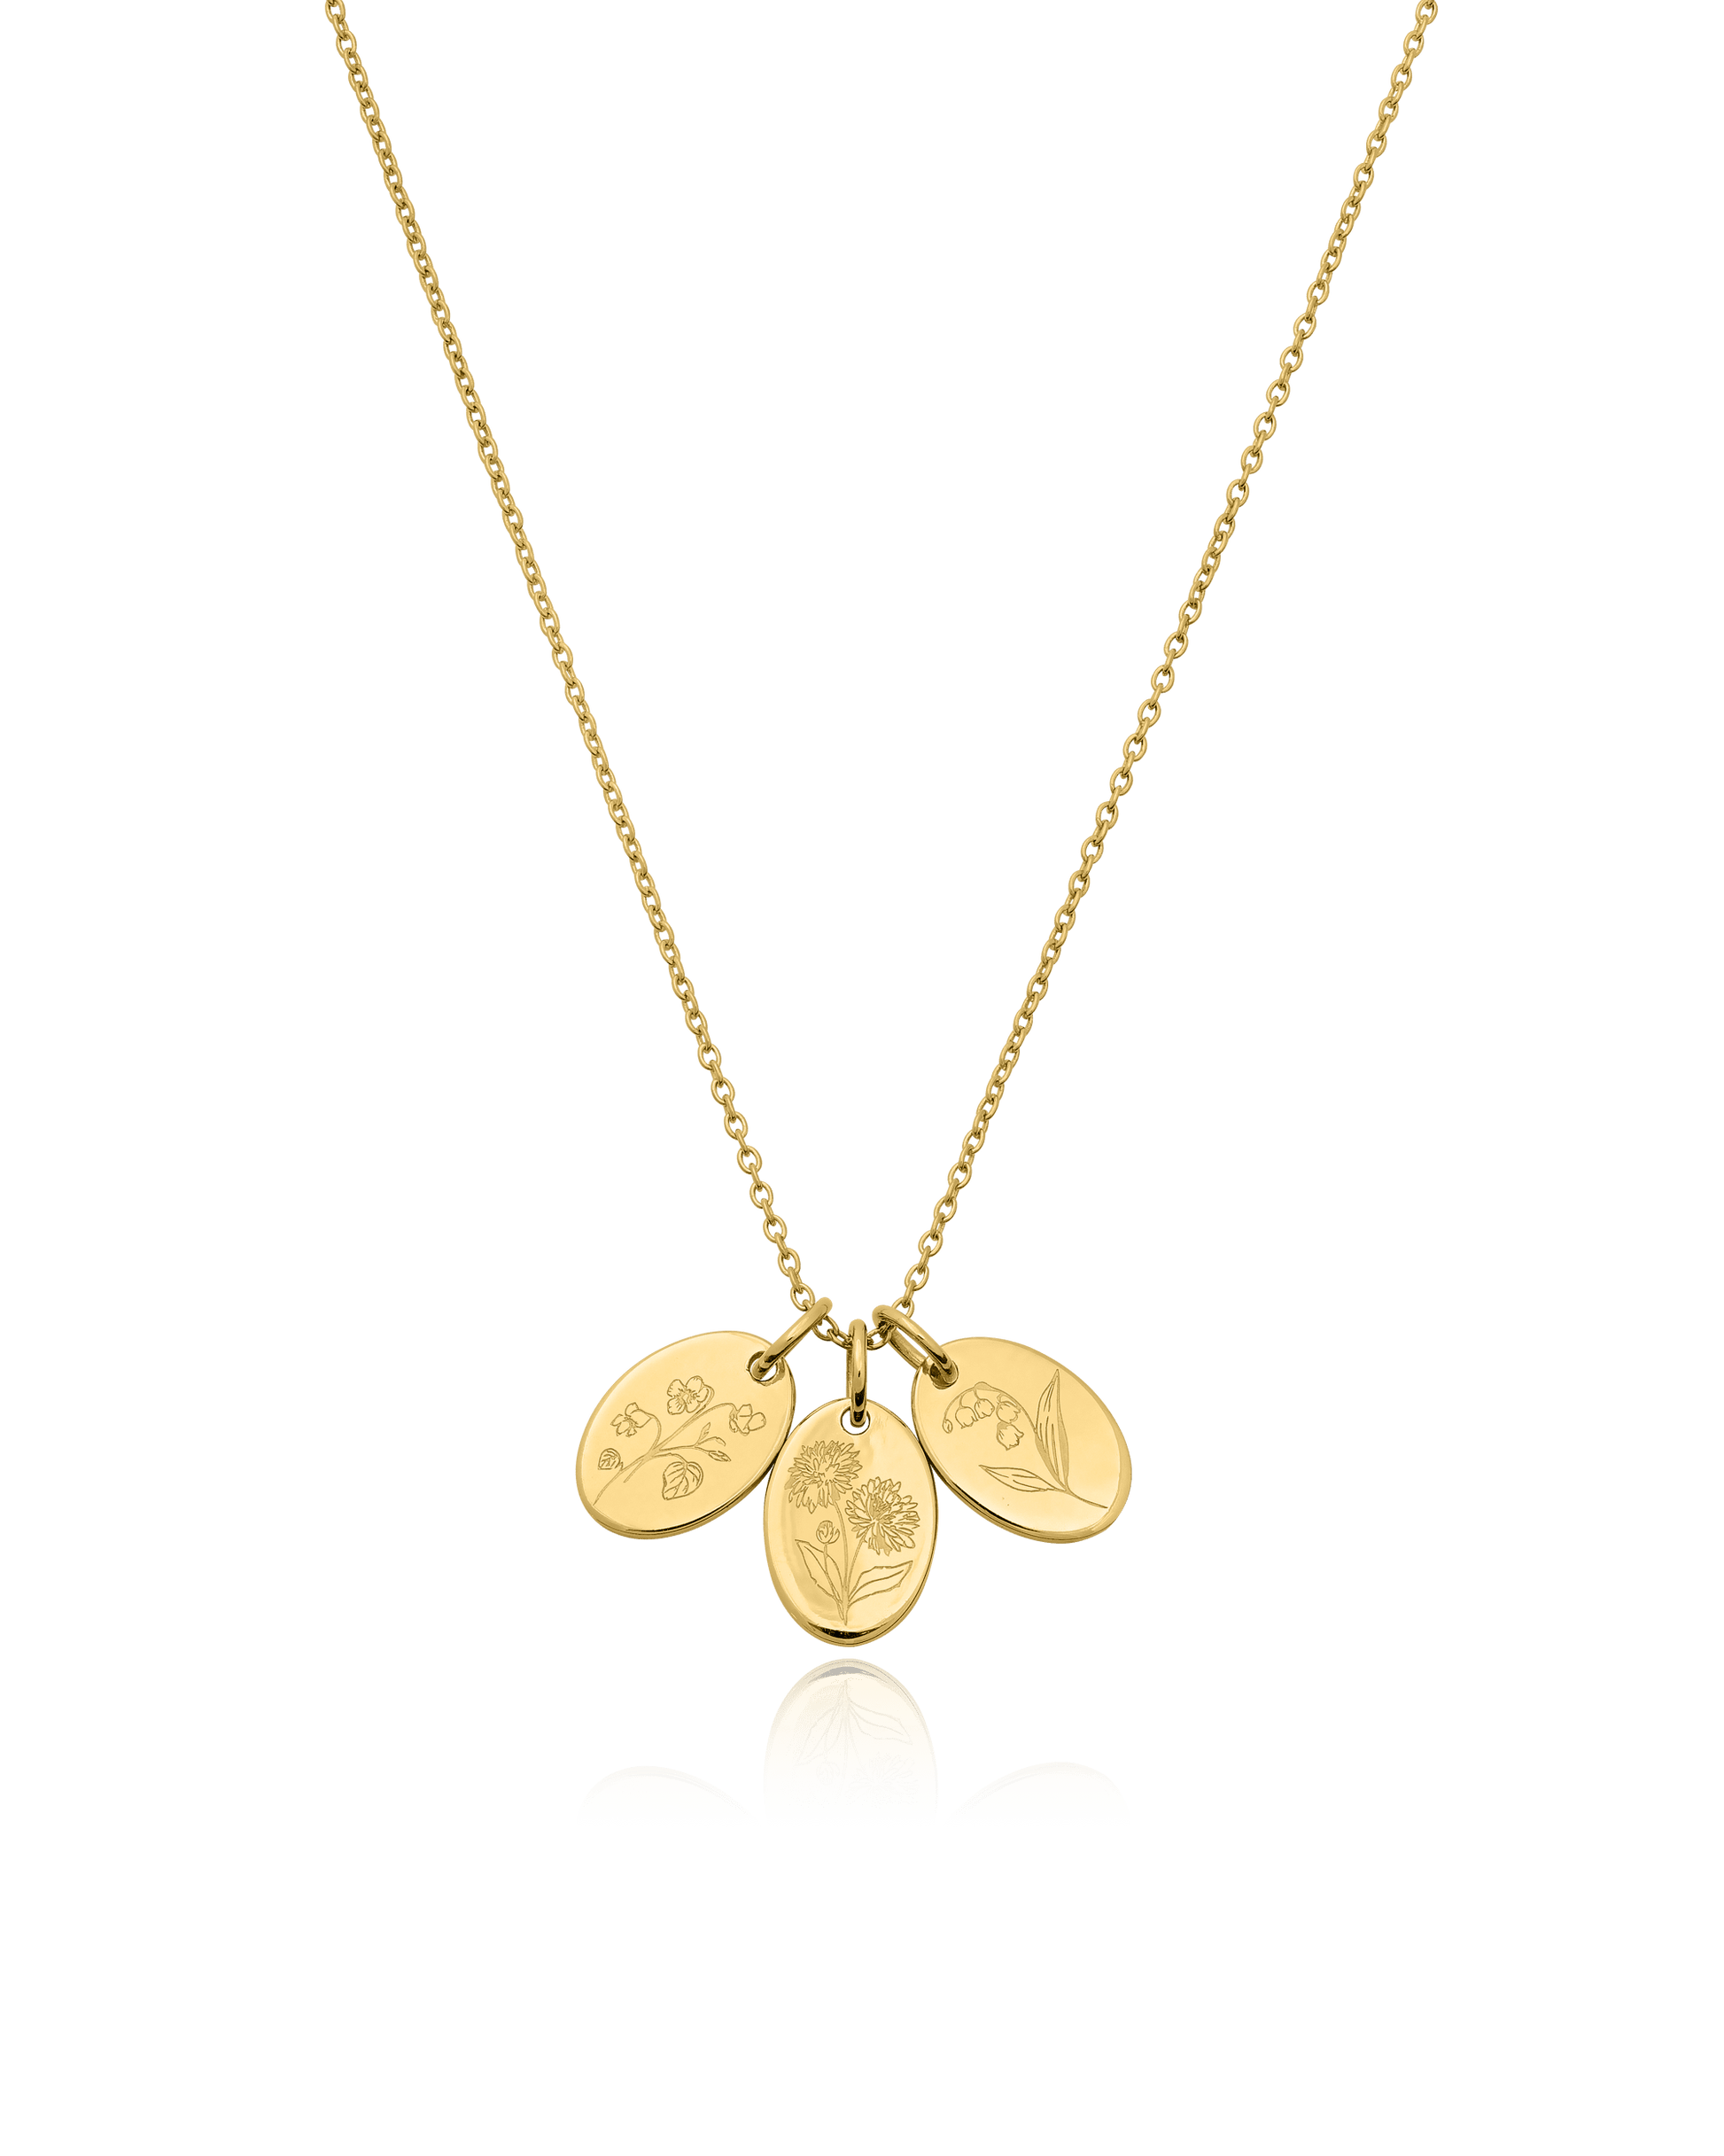 Flower Necklace - 18K Gold Vermeil Necklaces magal-dev 1 Tag 16” 